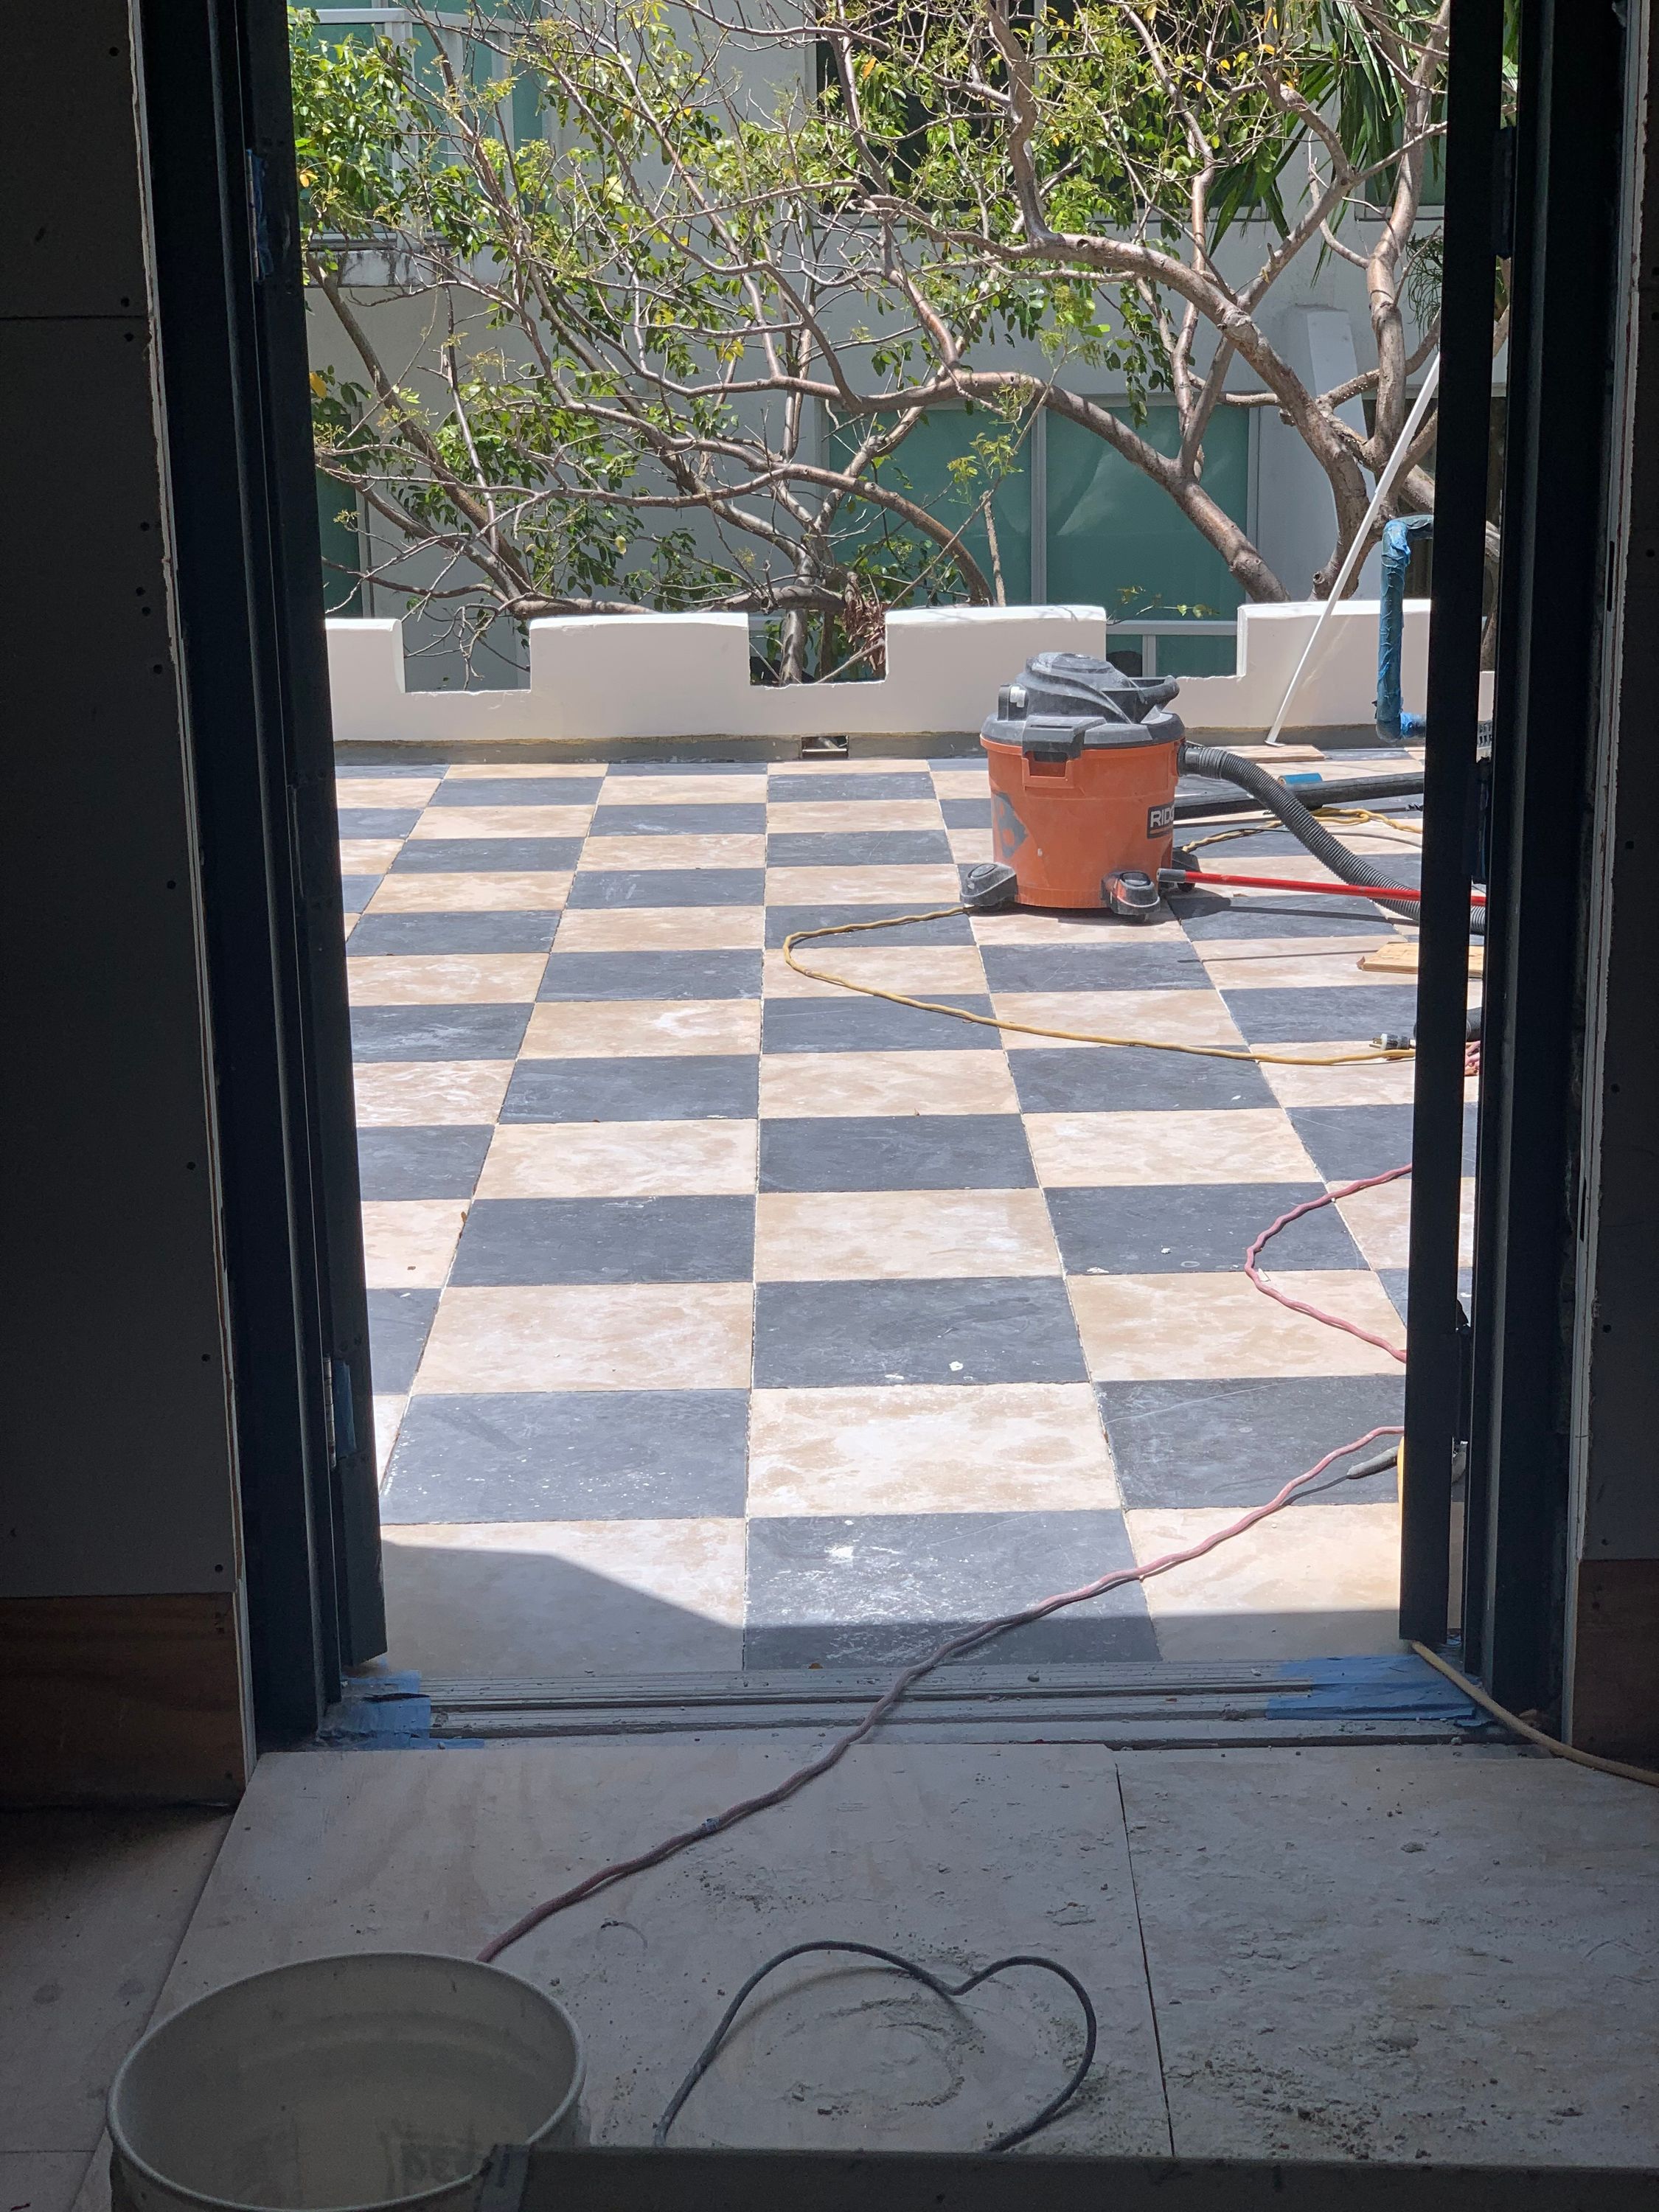 Checkerboard tile floor